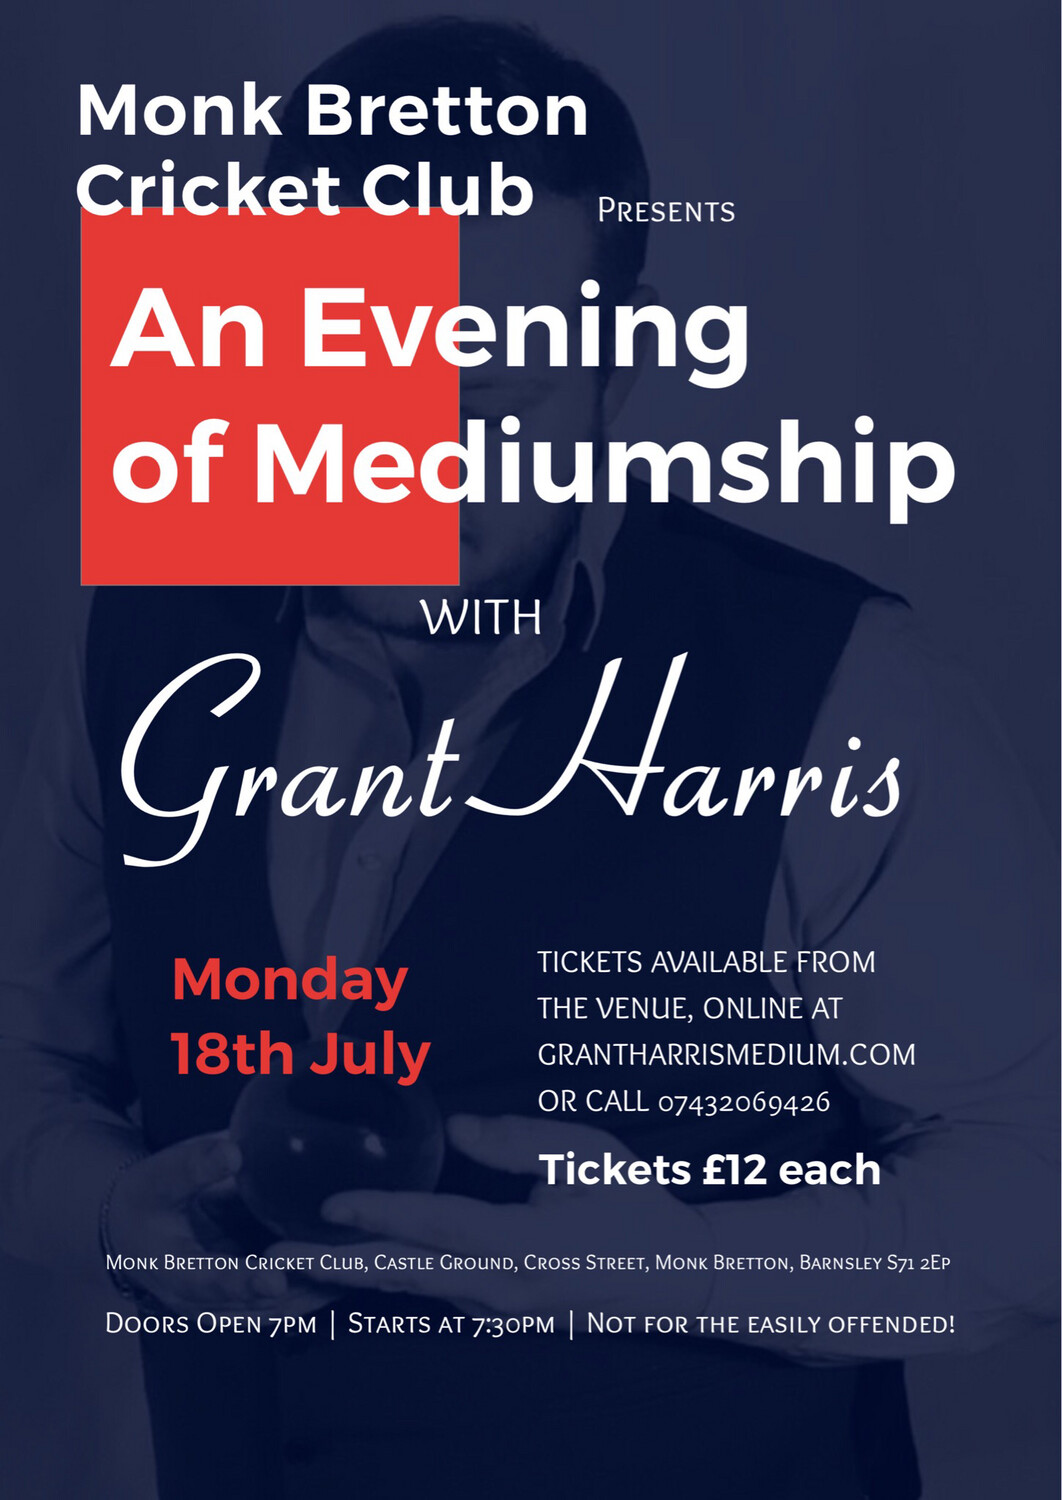 Evening of Mediumship, Monk Bretton Cricket Club, Barnsley, Mon 18th July 2022